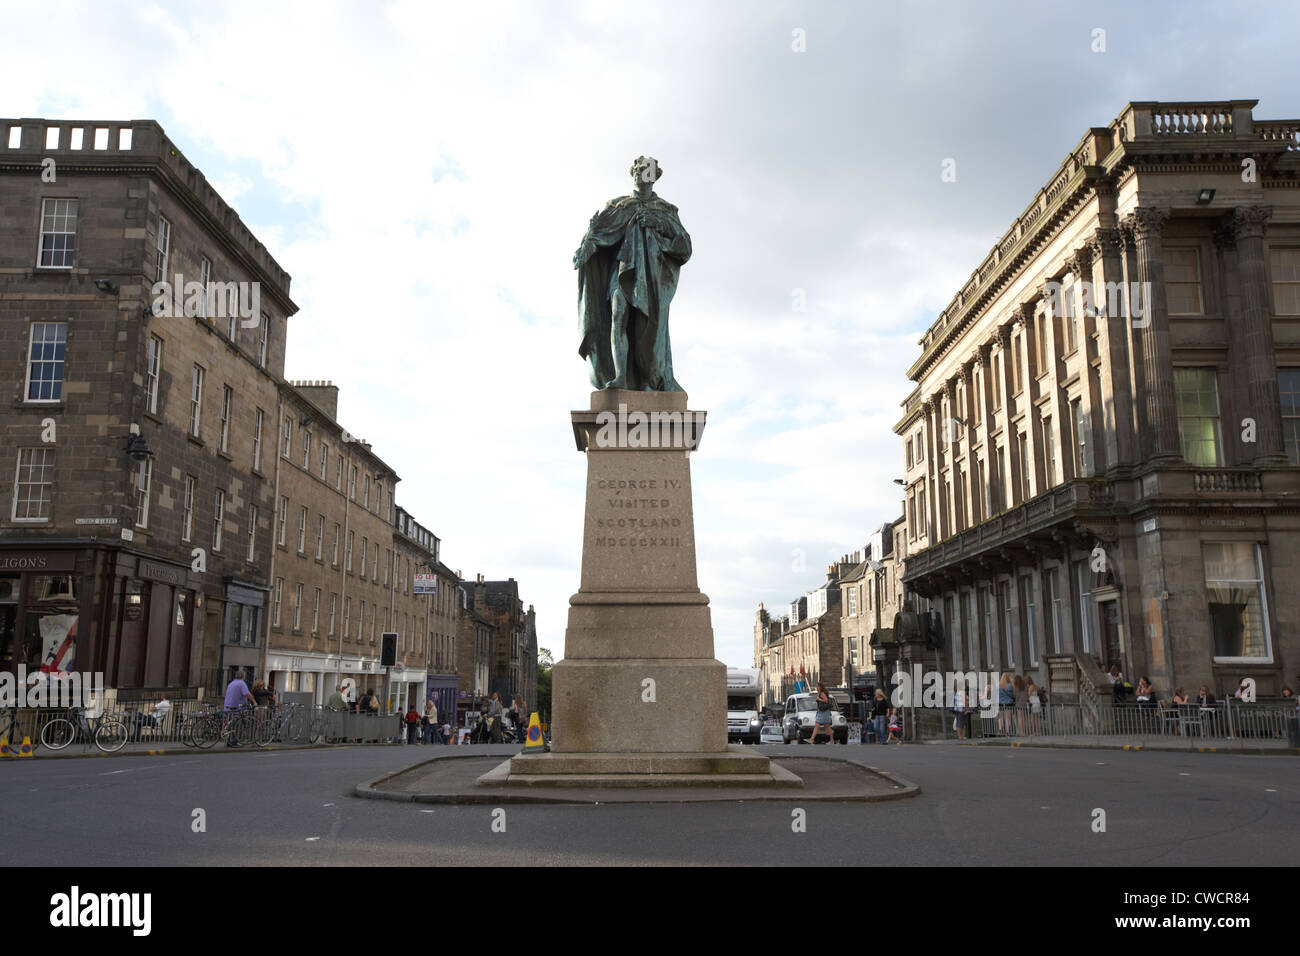 El rey George IV Cuarta estatua George street y st hanover Edimburgo Scotland Reino Unido reino unido Foto de stock